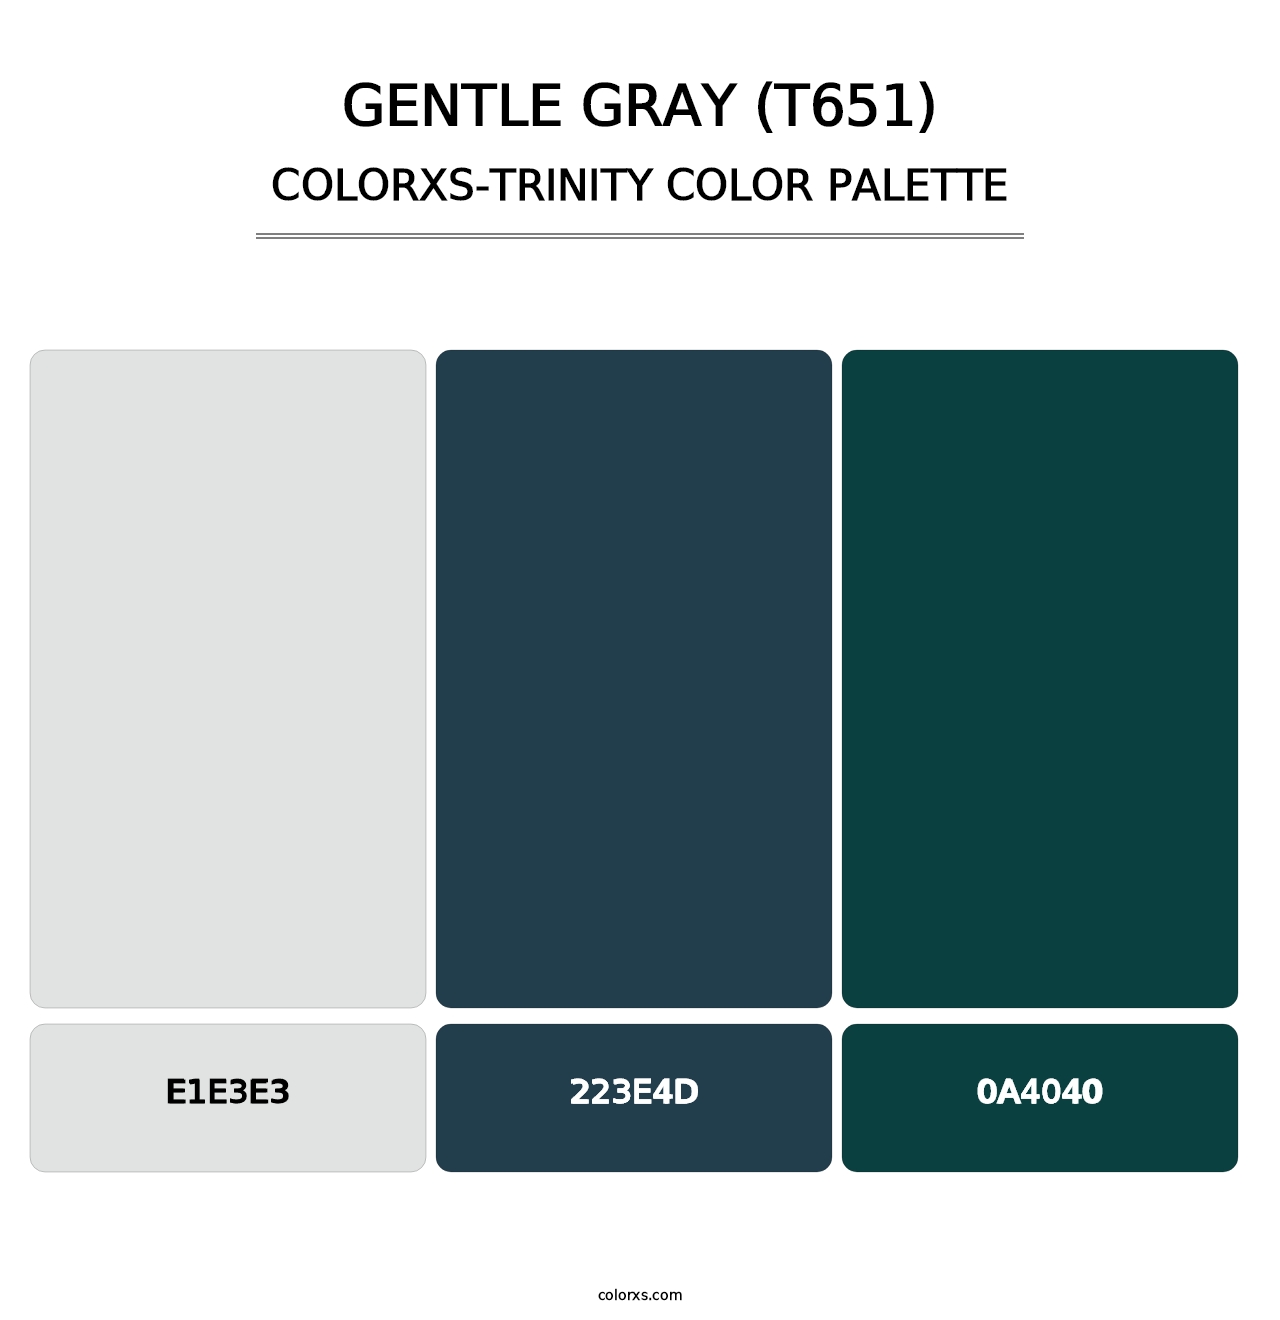 Gentle Gray (T651) - Colorxs Trinity Palette